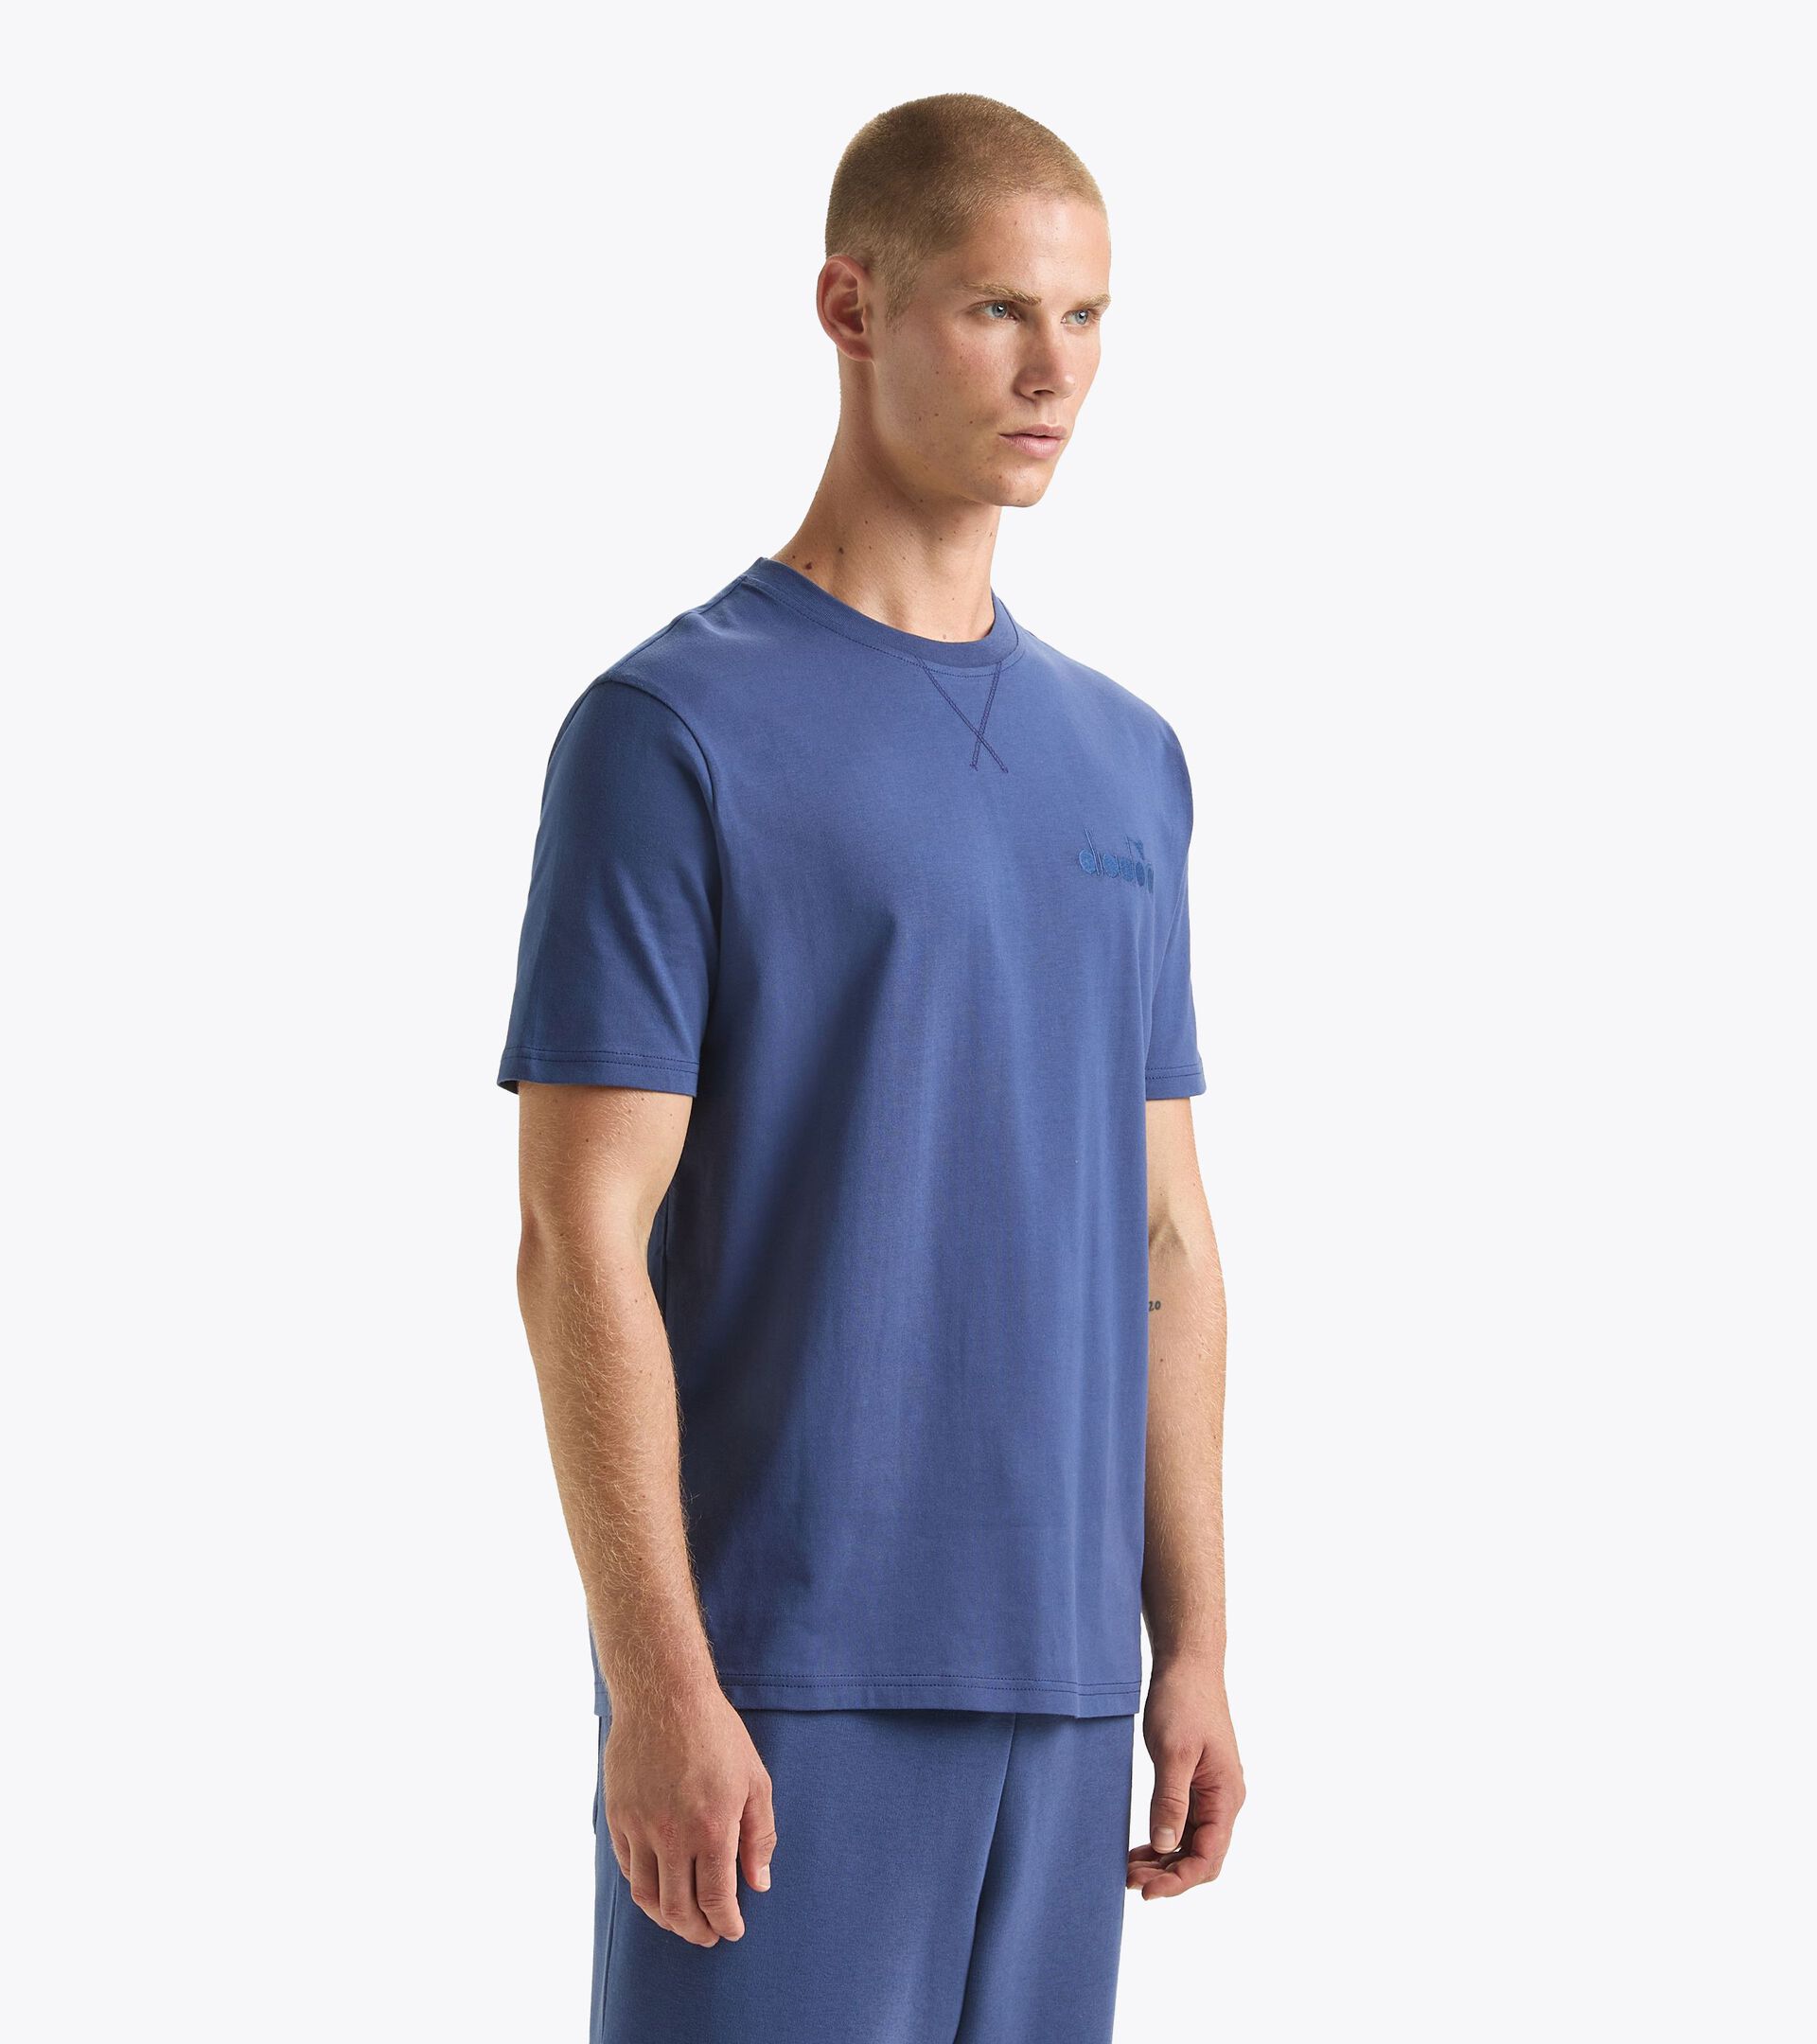 Camiseta - Gender neutral T-SHIRT SS ATHL. LOGO OCEANA - Diadora